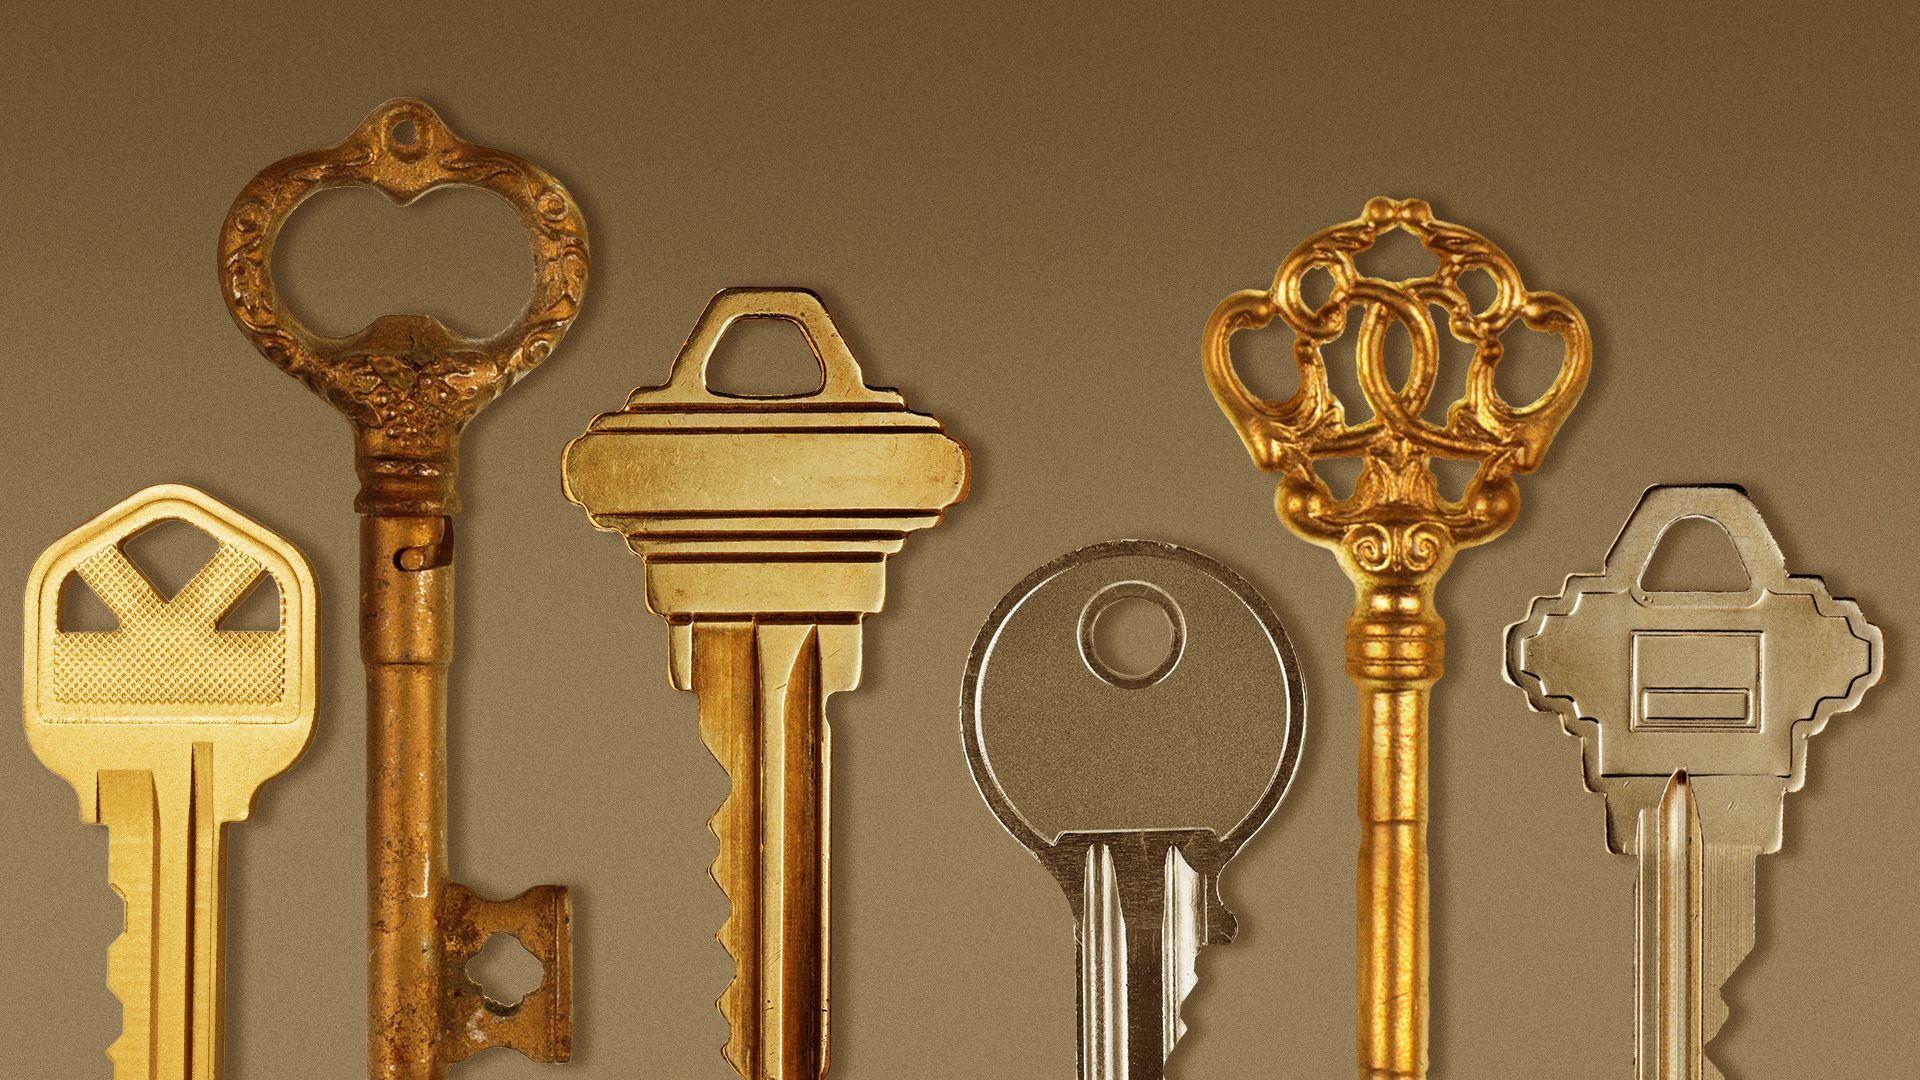 Illustration of old and new keys standing together.